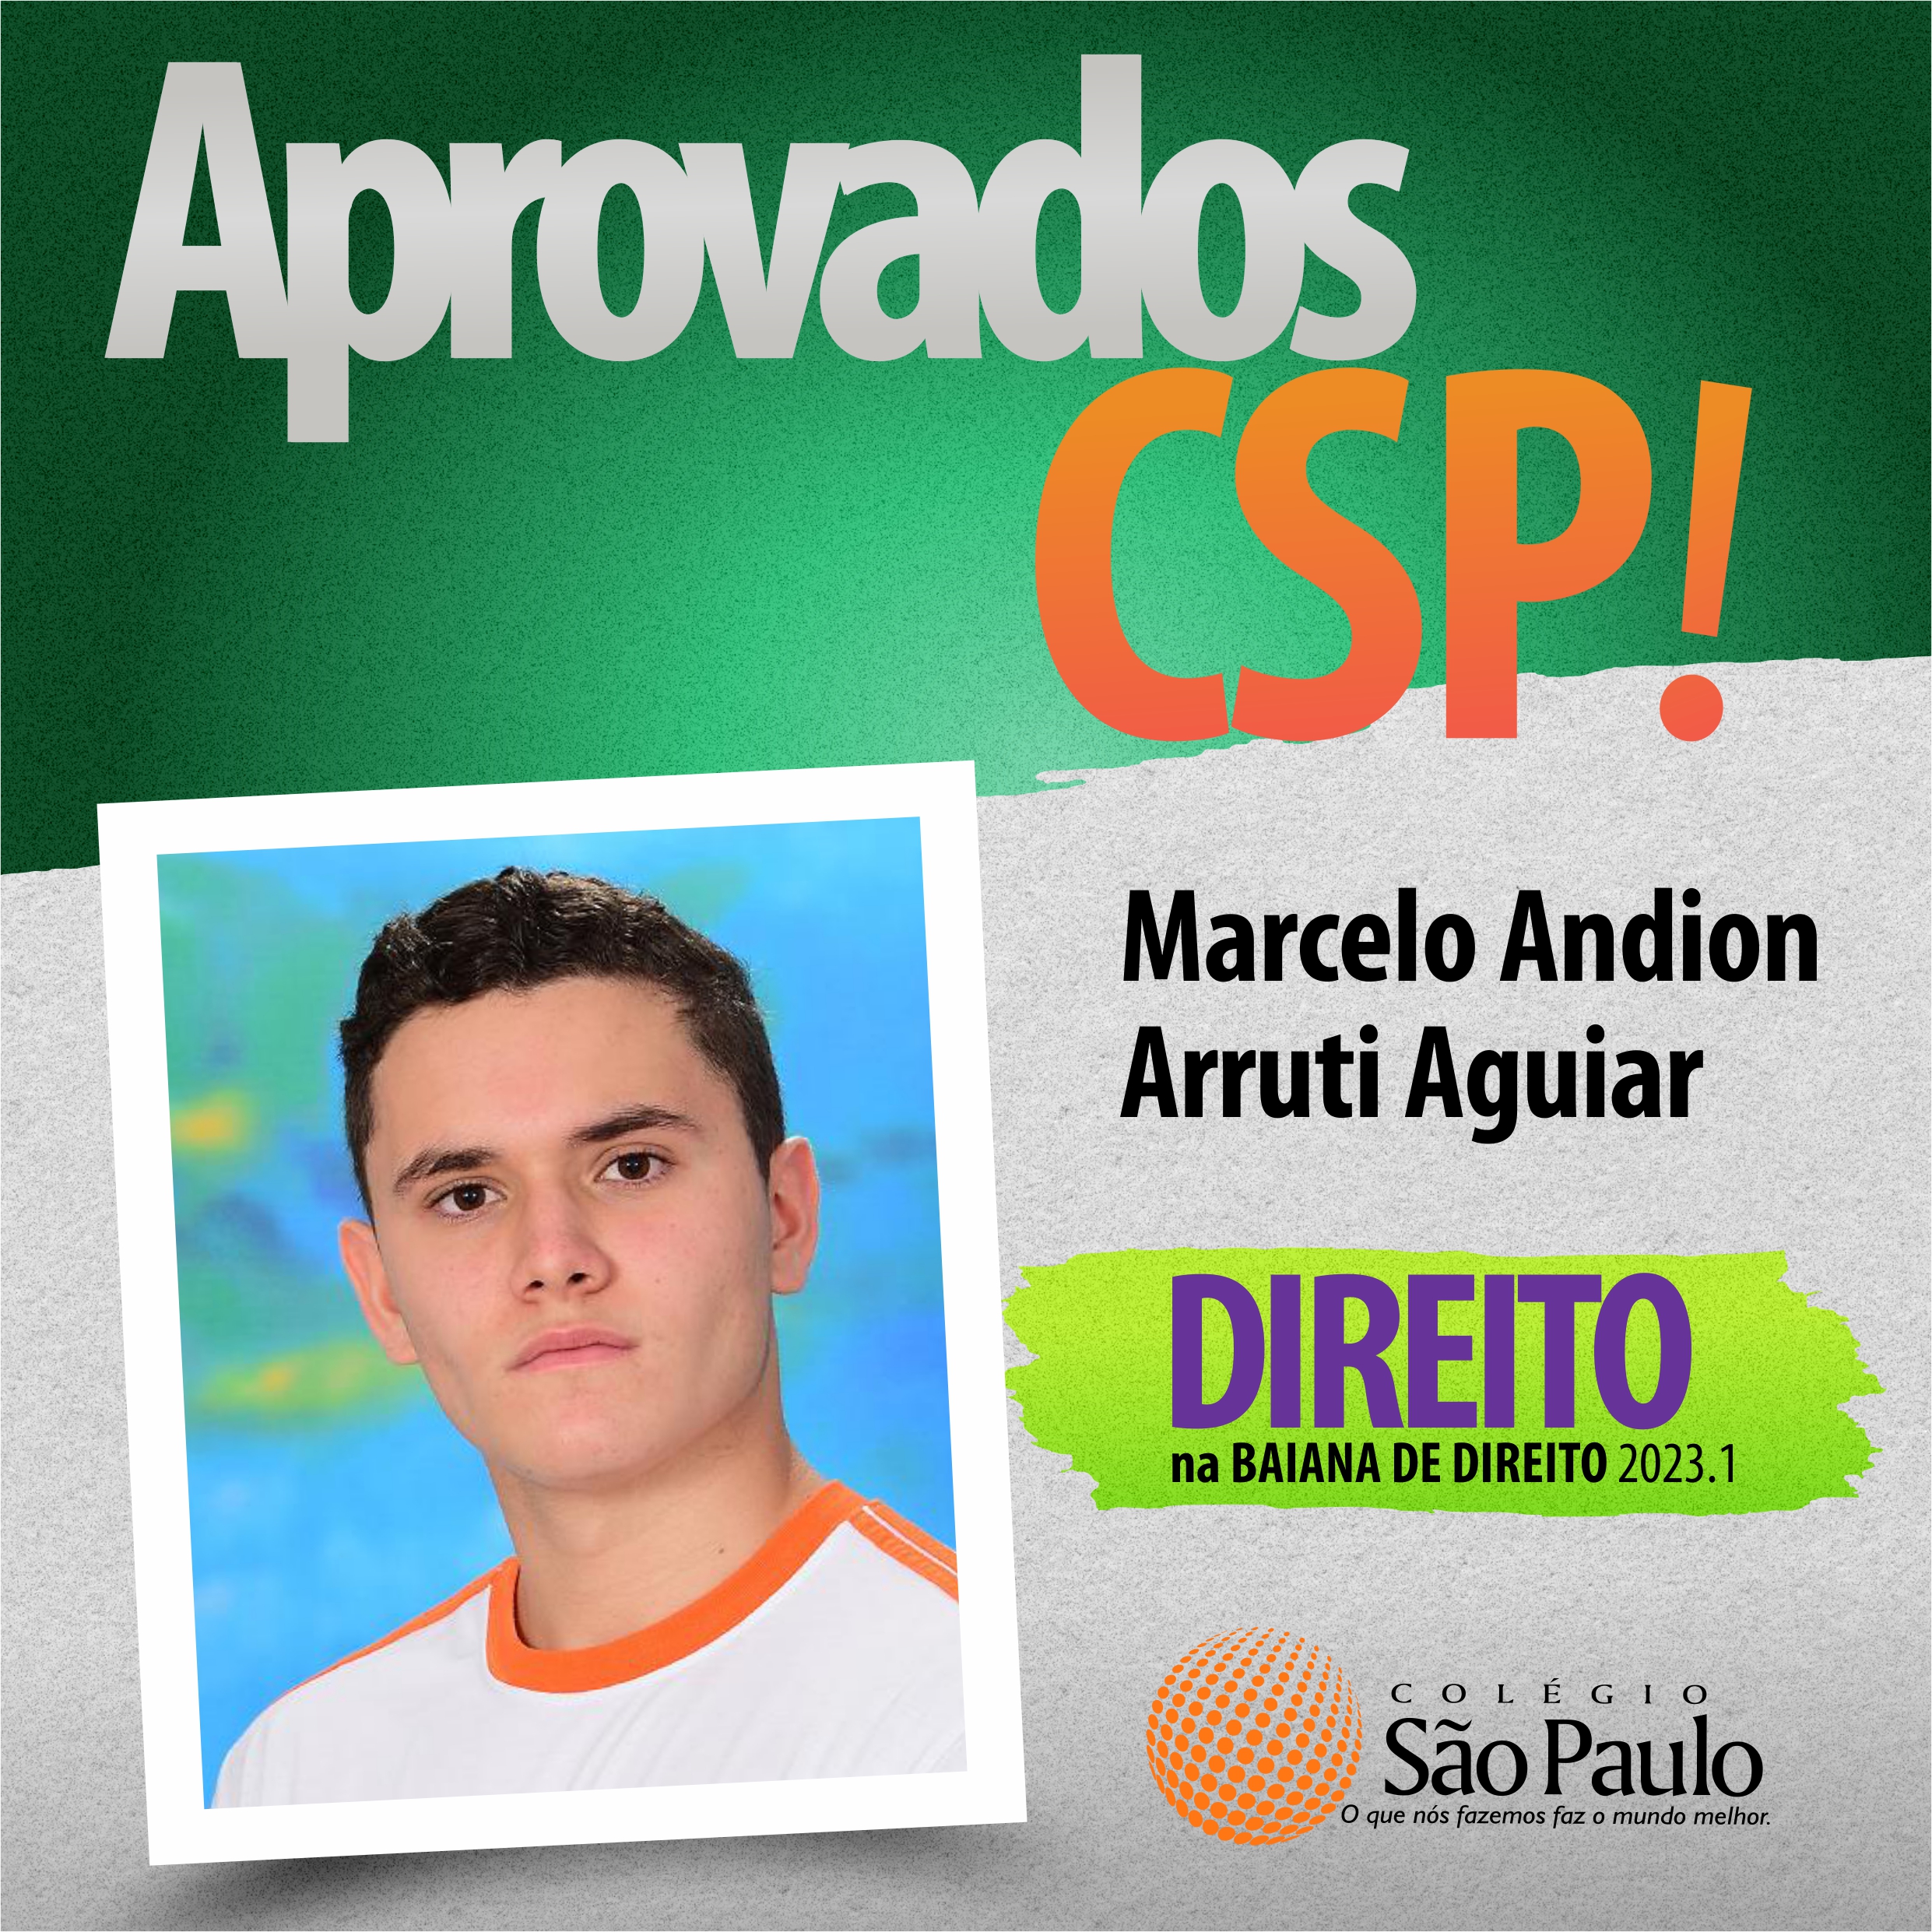 Marcelo Andion - Direito